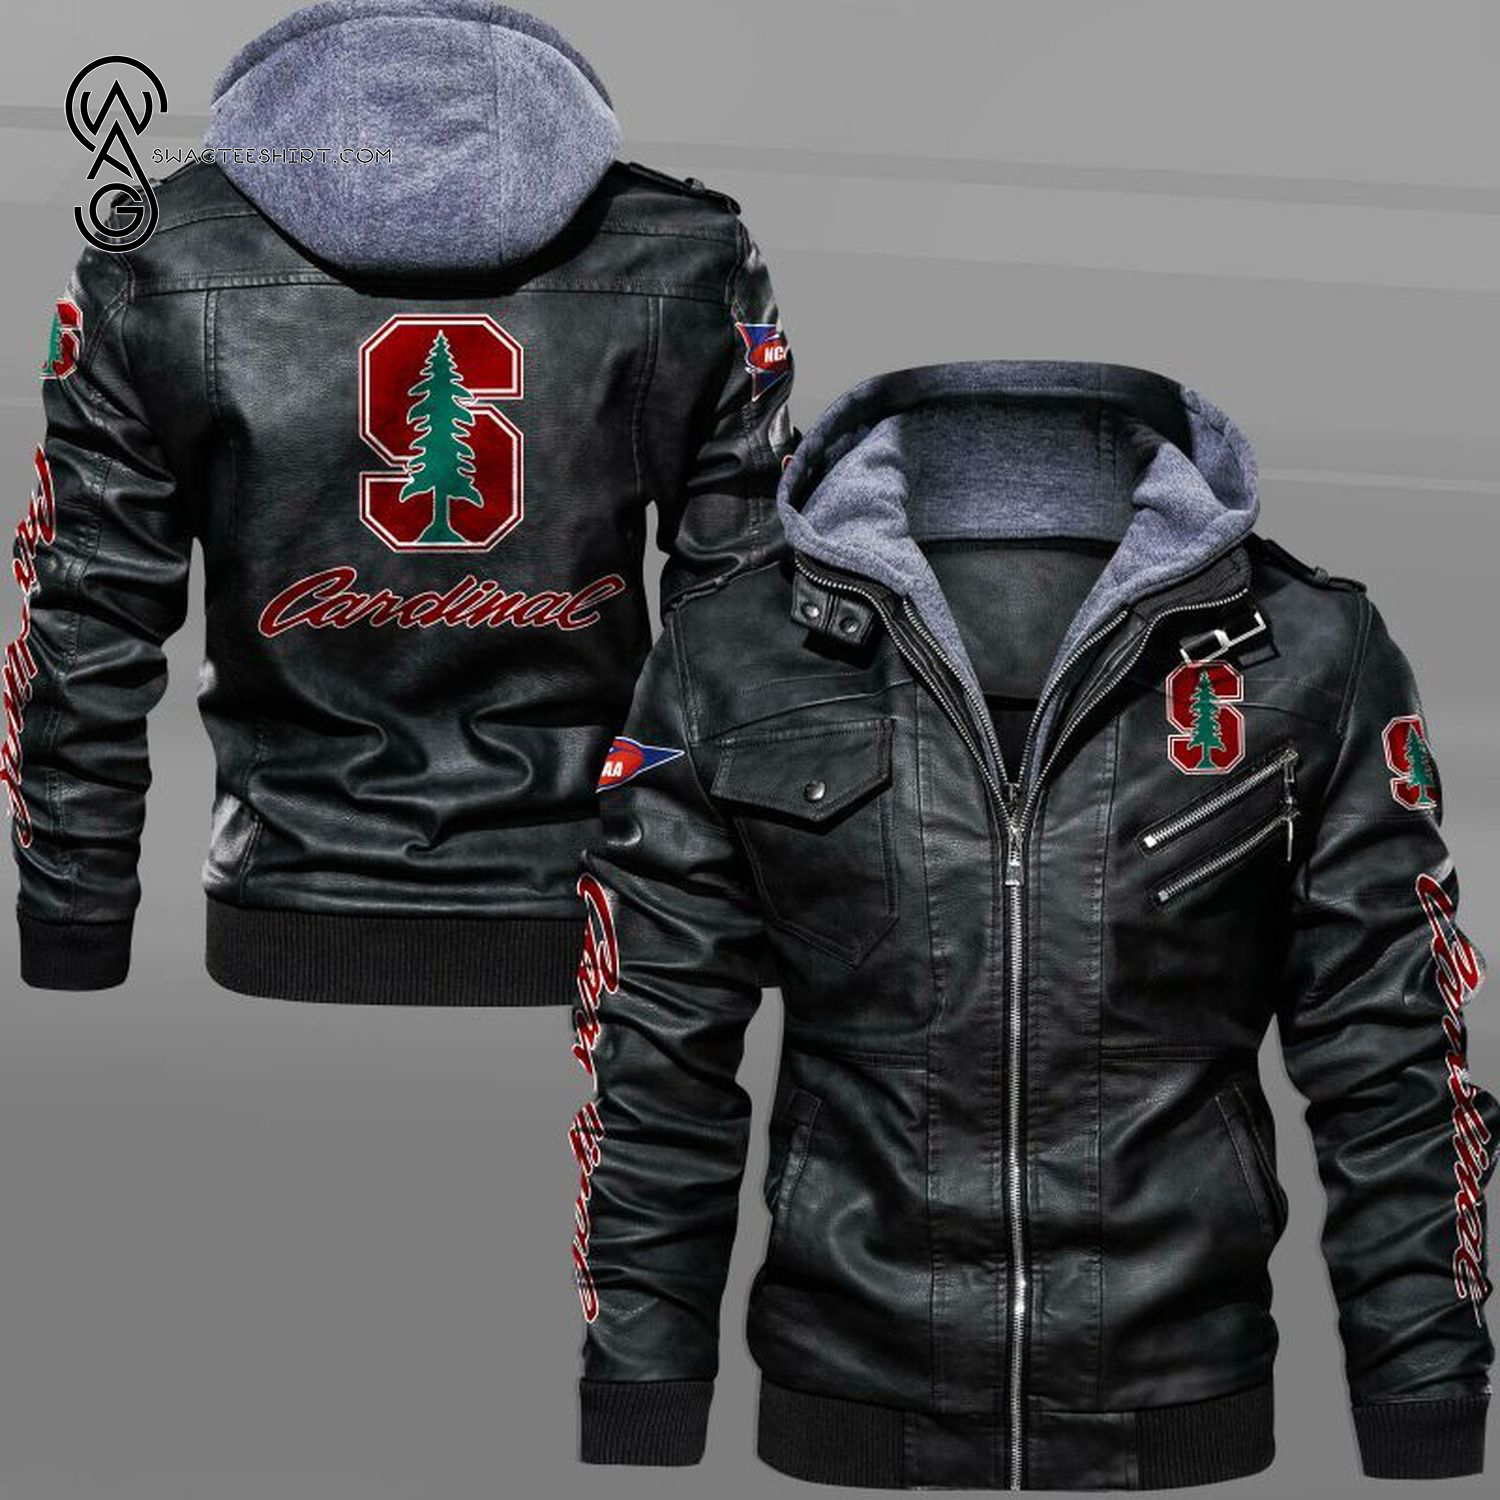 Stanford Cardinal Sport Team Leather Jacket